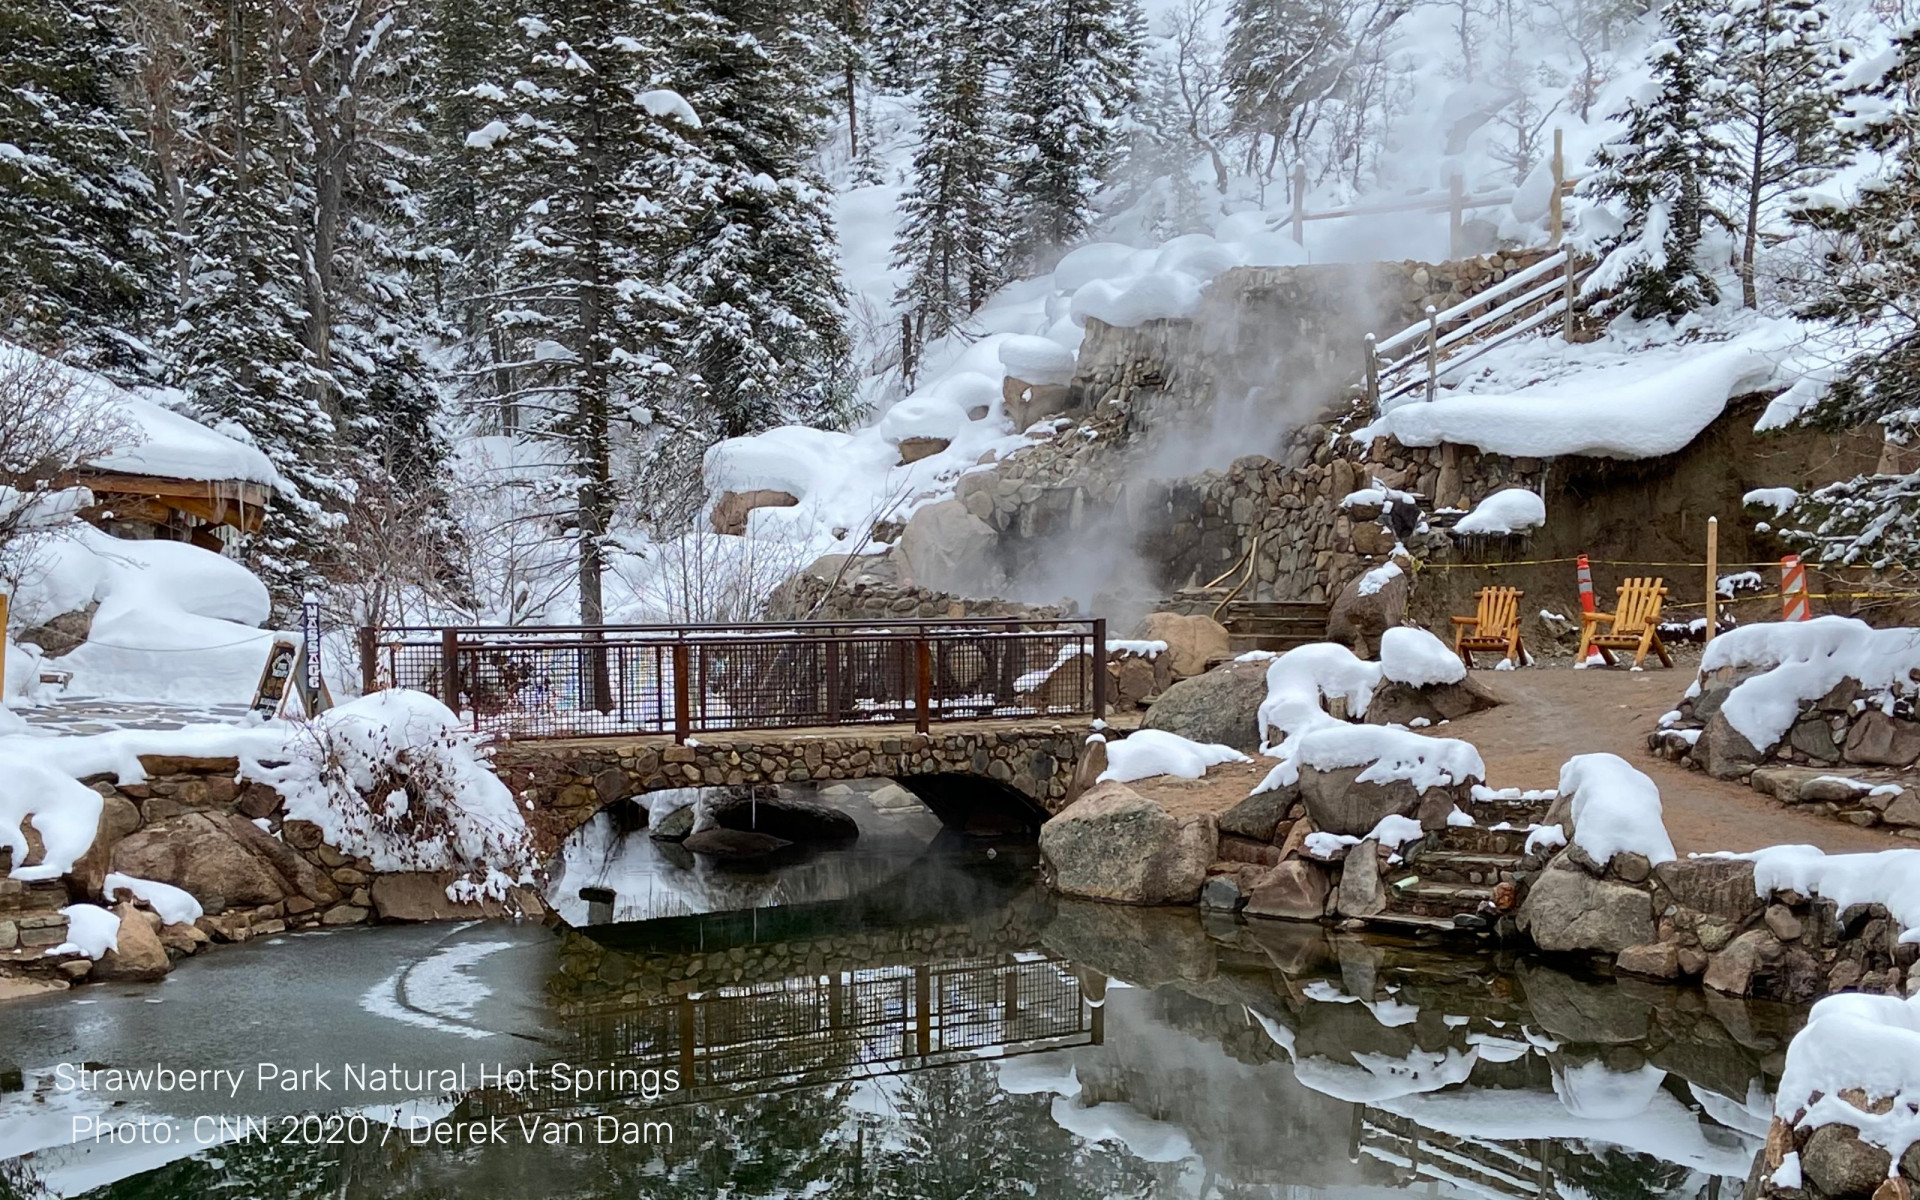 hot springs to visit in winter